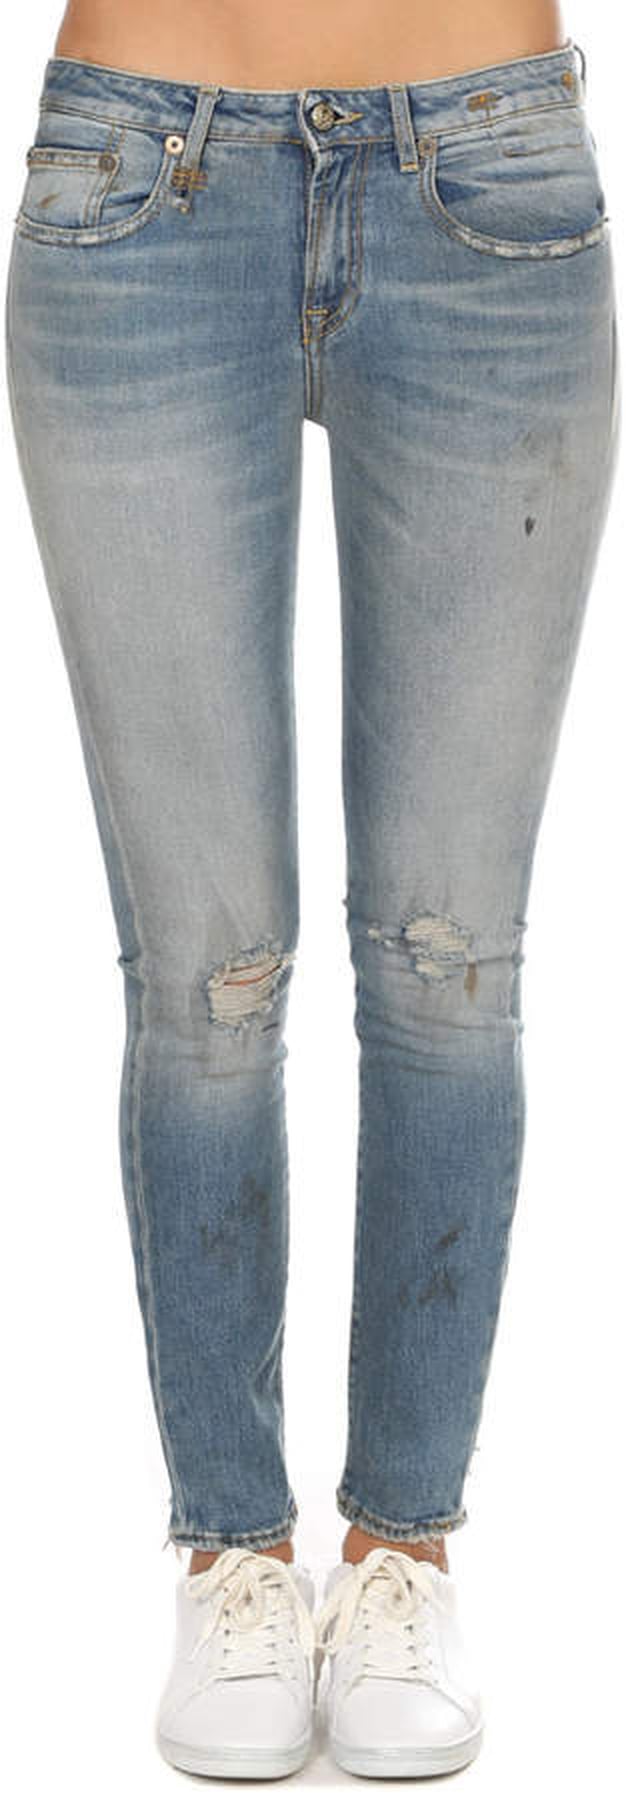 Meghan Markle's Favorite Jeans | POPSUGAR Fashion